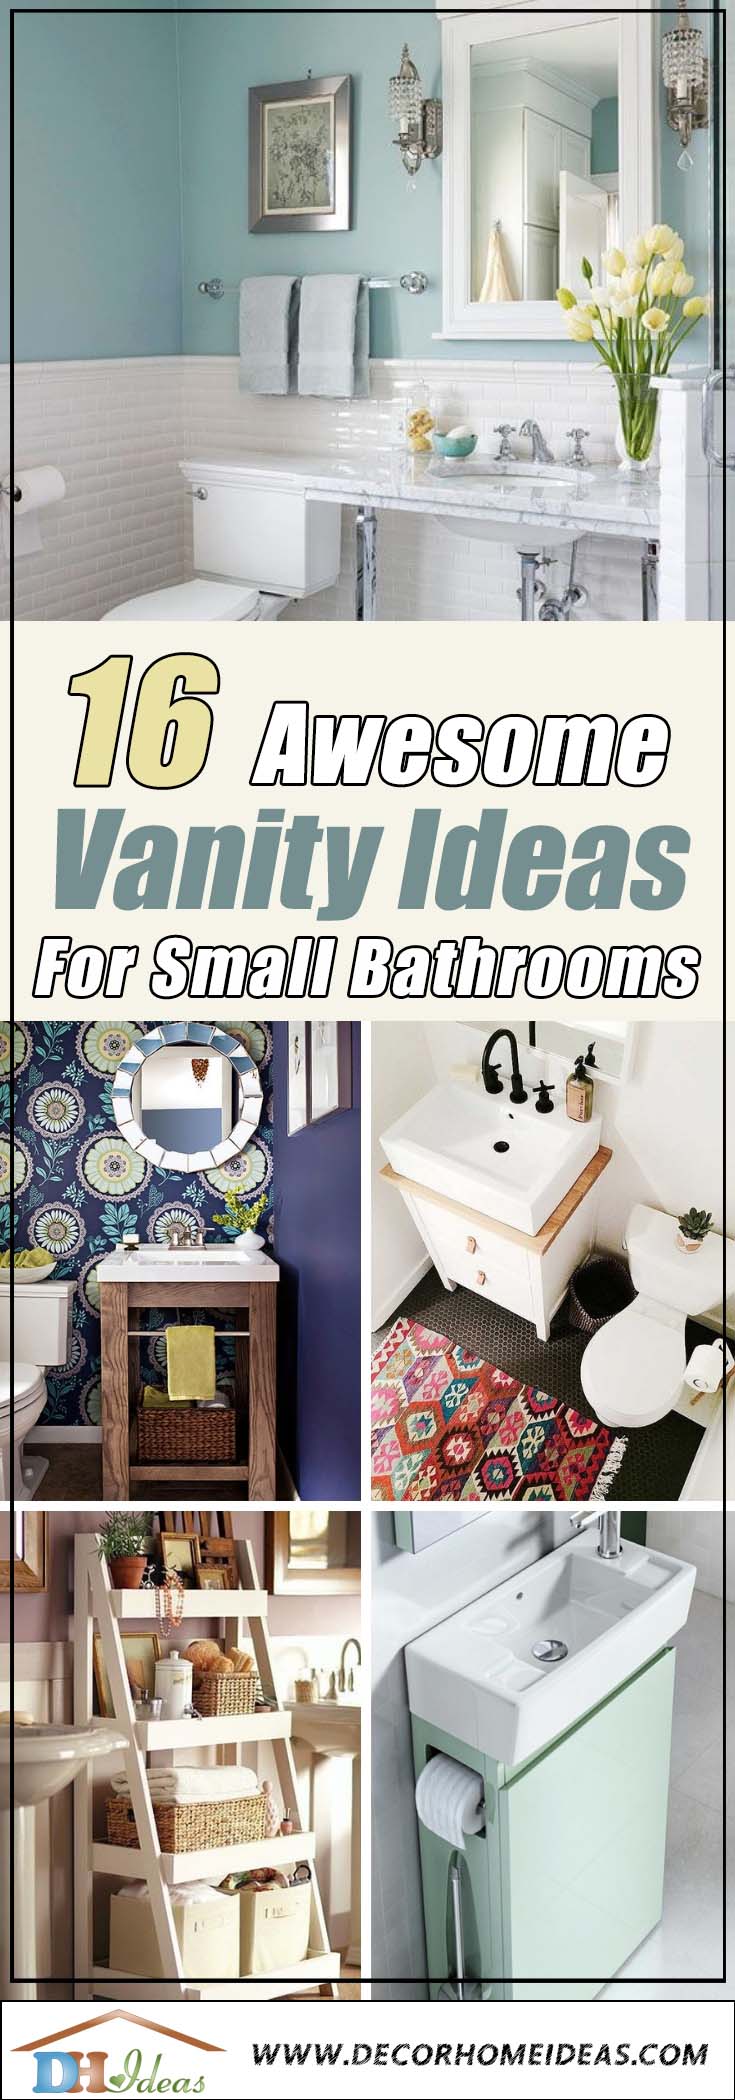 16 Awesome Vanity Ideas For Small Bathrooms #vanity #bathroomvanity #vanityideas #bathroom #bathroomideas #storage #organization #decorhomeideas